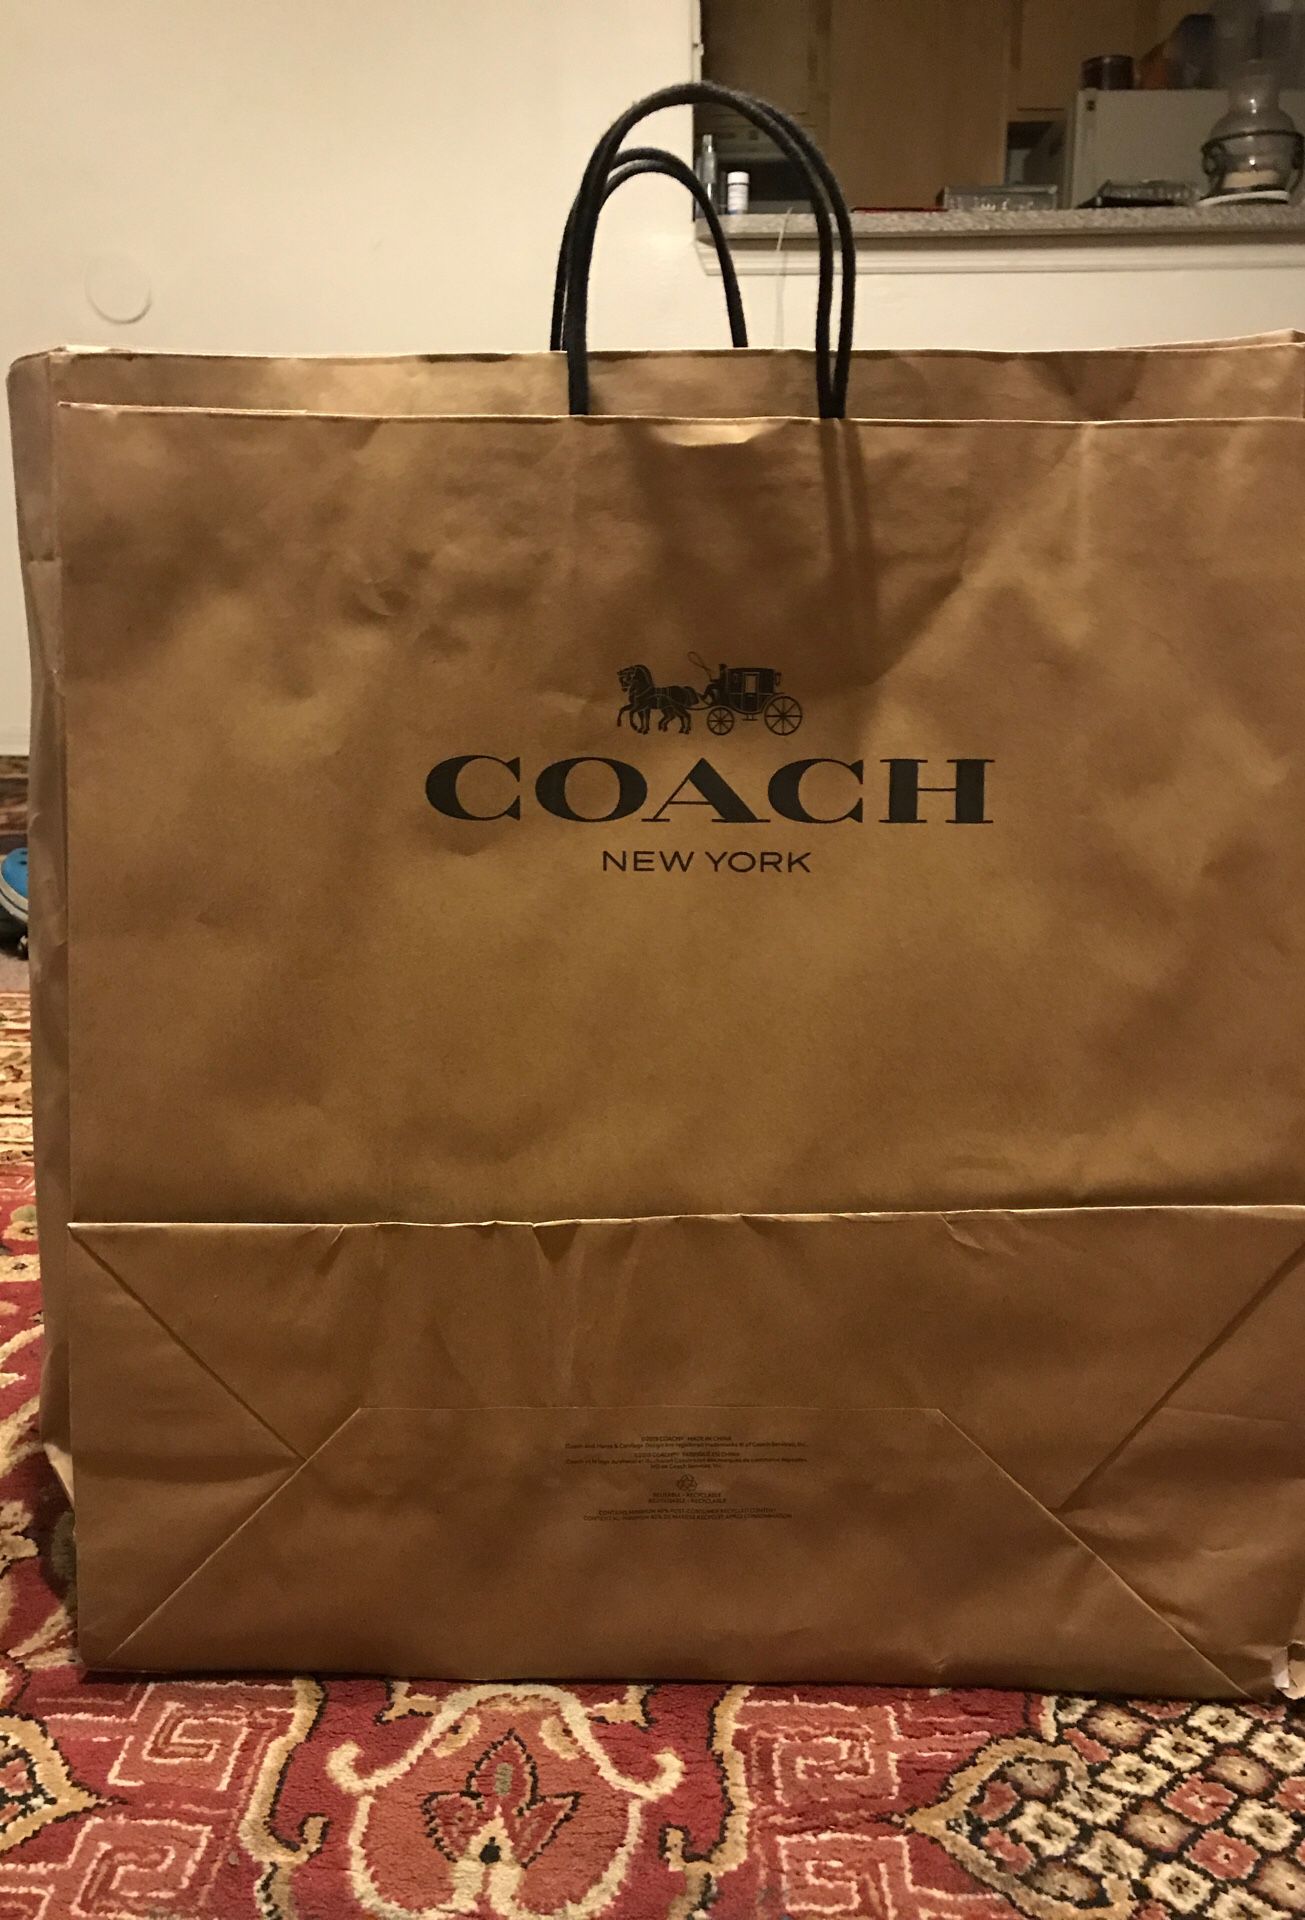 Coach paper bags